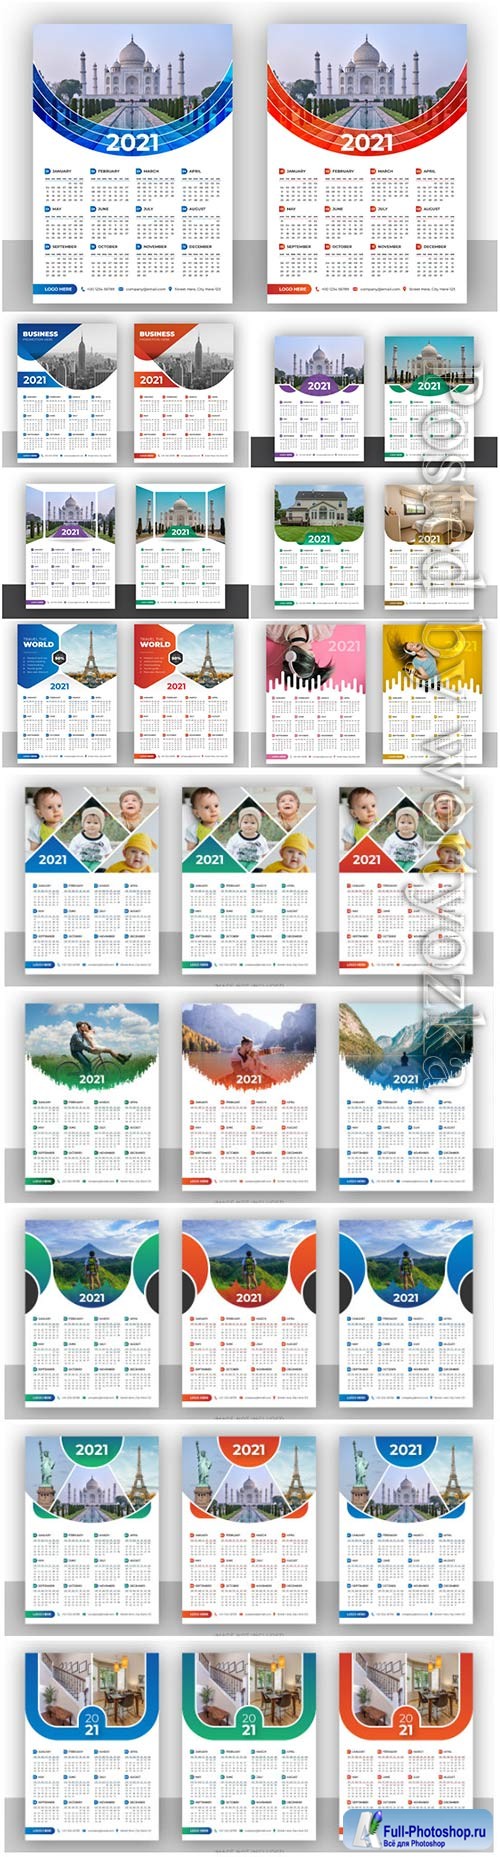 Calendar 2021 design vector template for new year